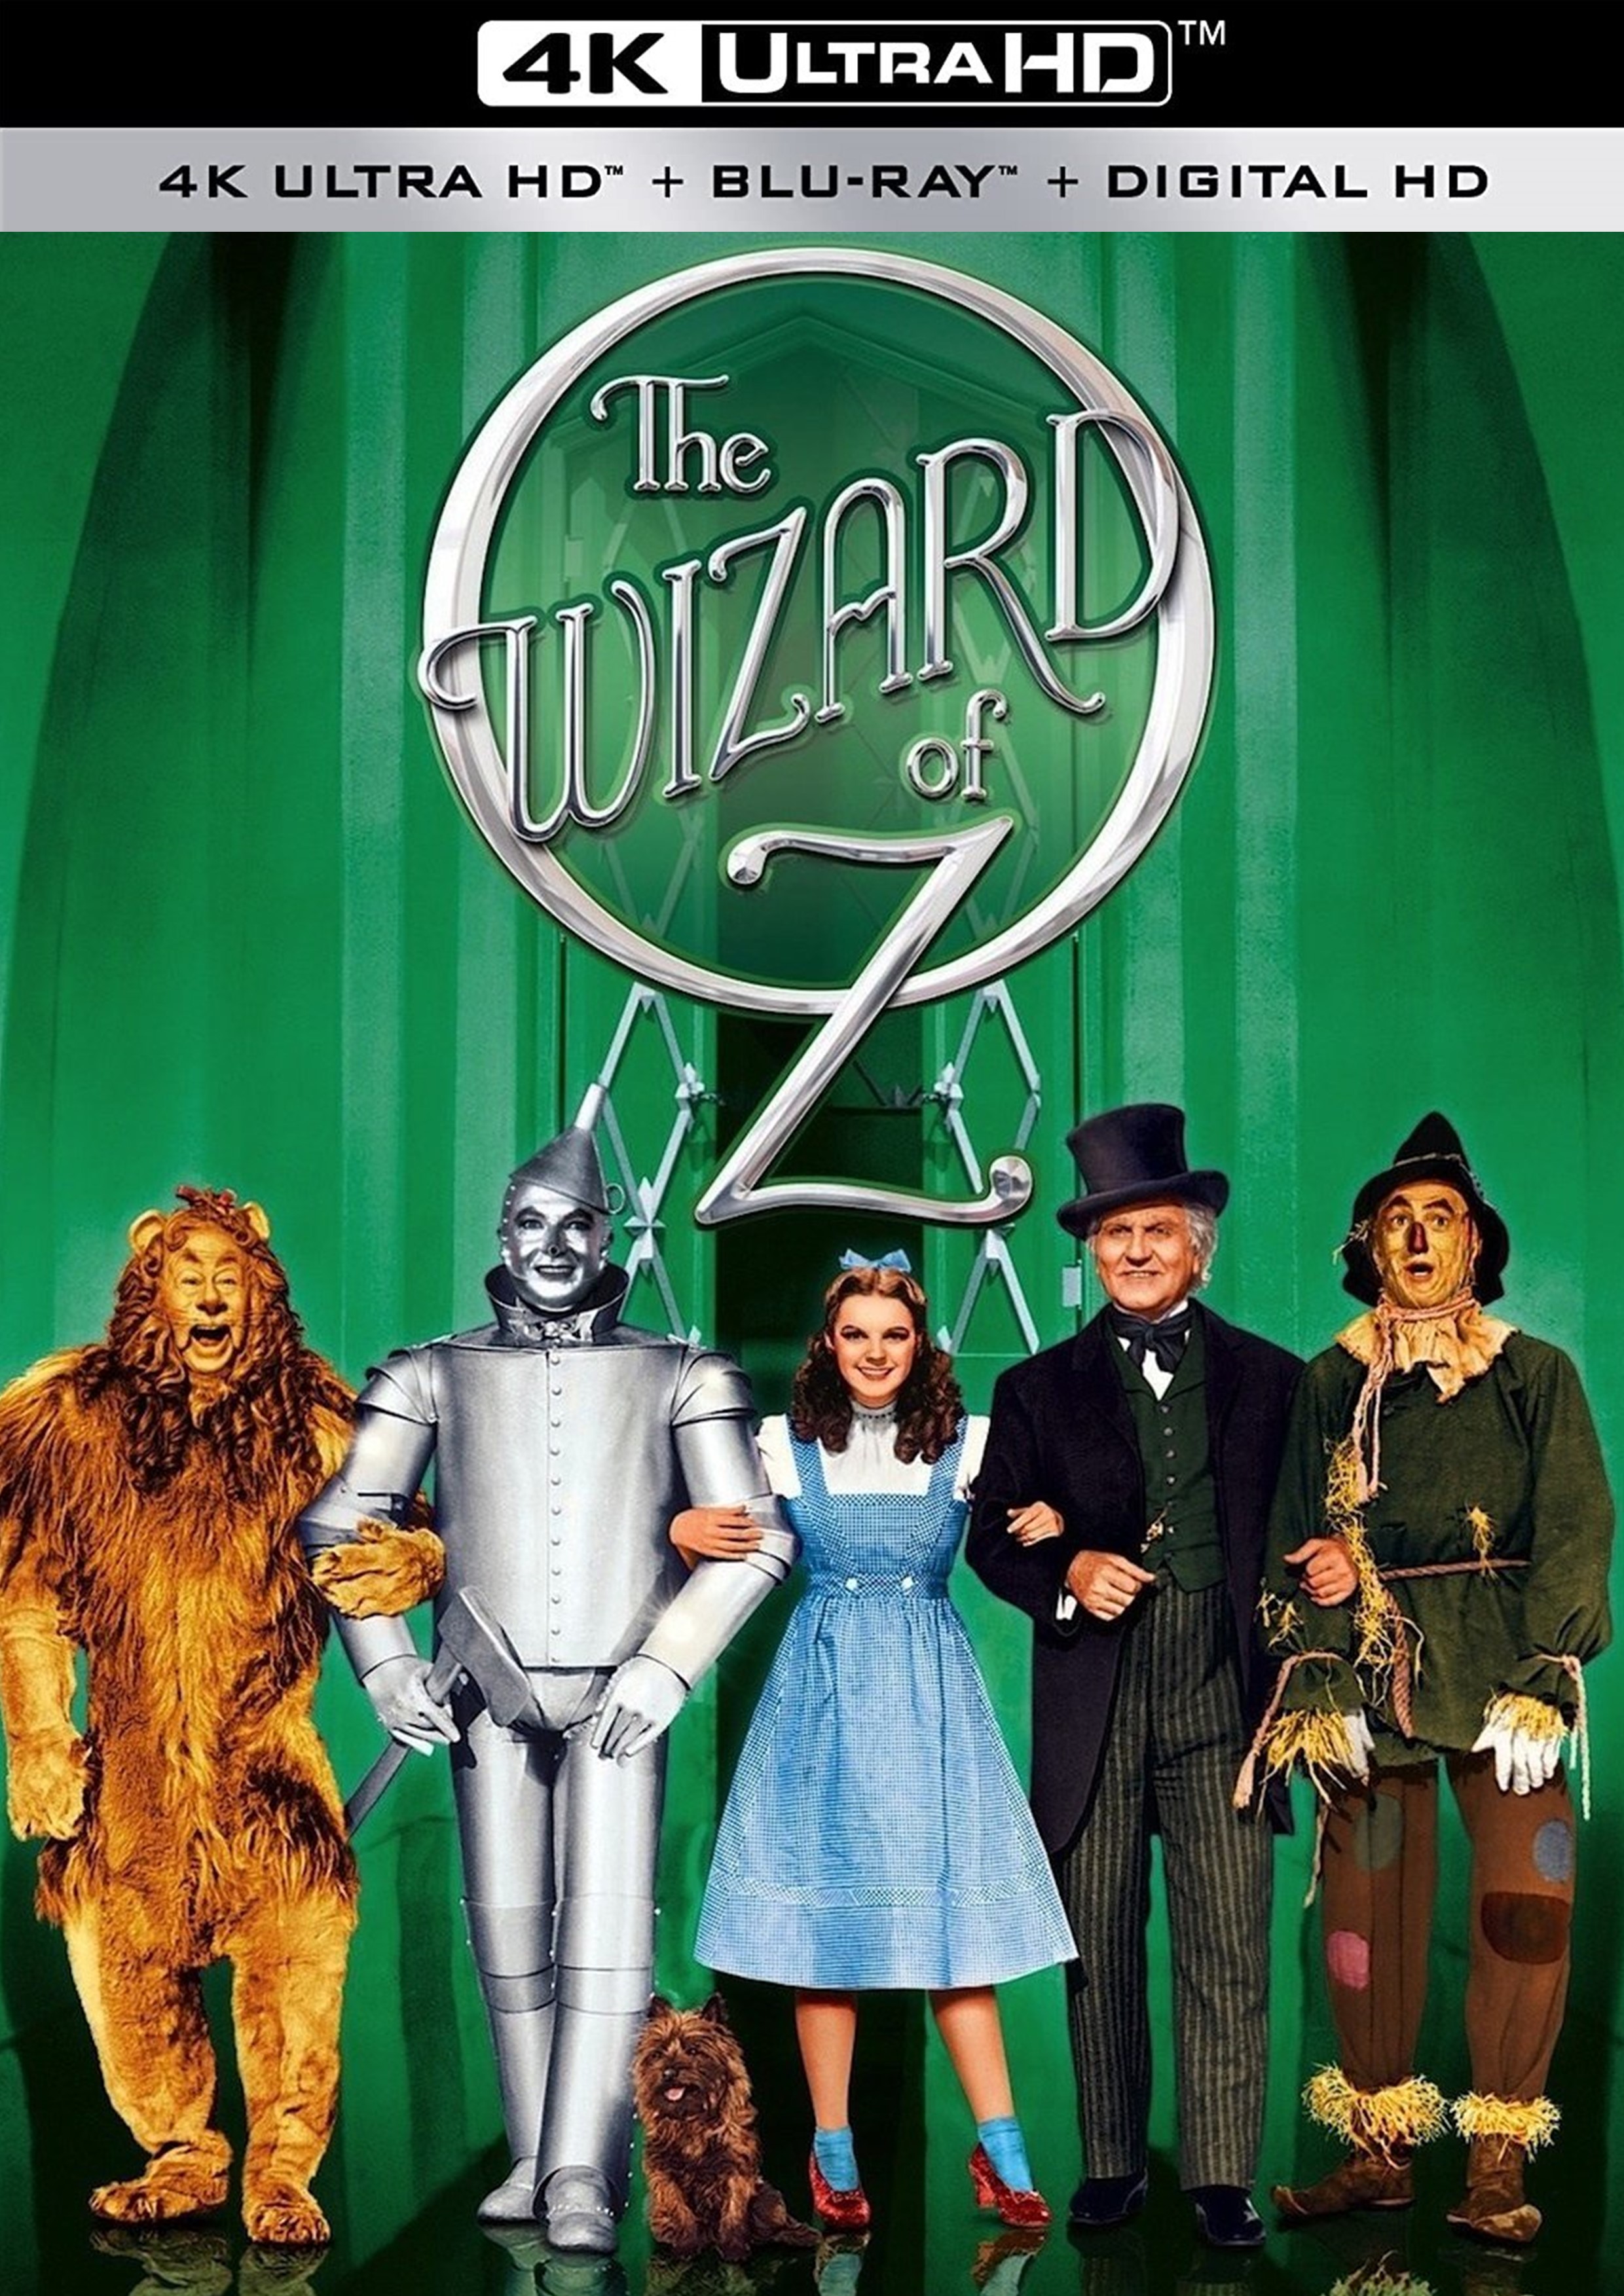 Stiahni si UHD Filmy Carodej ze zeme OZ / The Wizard of OZ(1939)(CZ/EN)(2160p 4K BRRip) = CSFD 78%